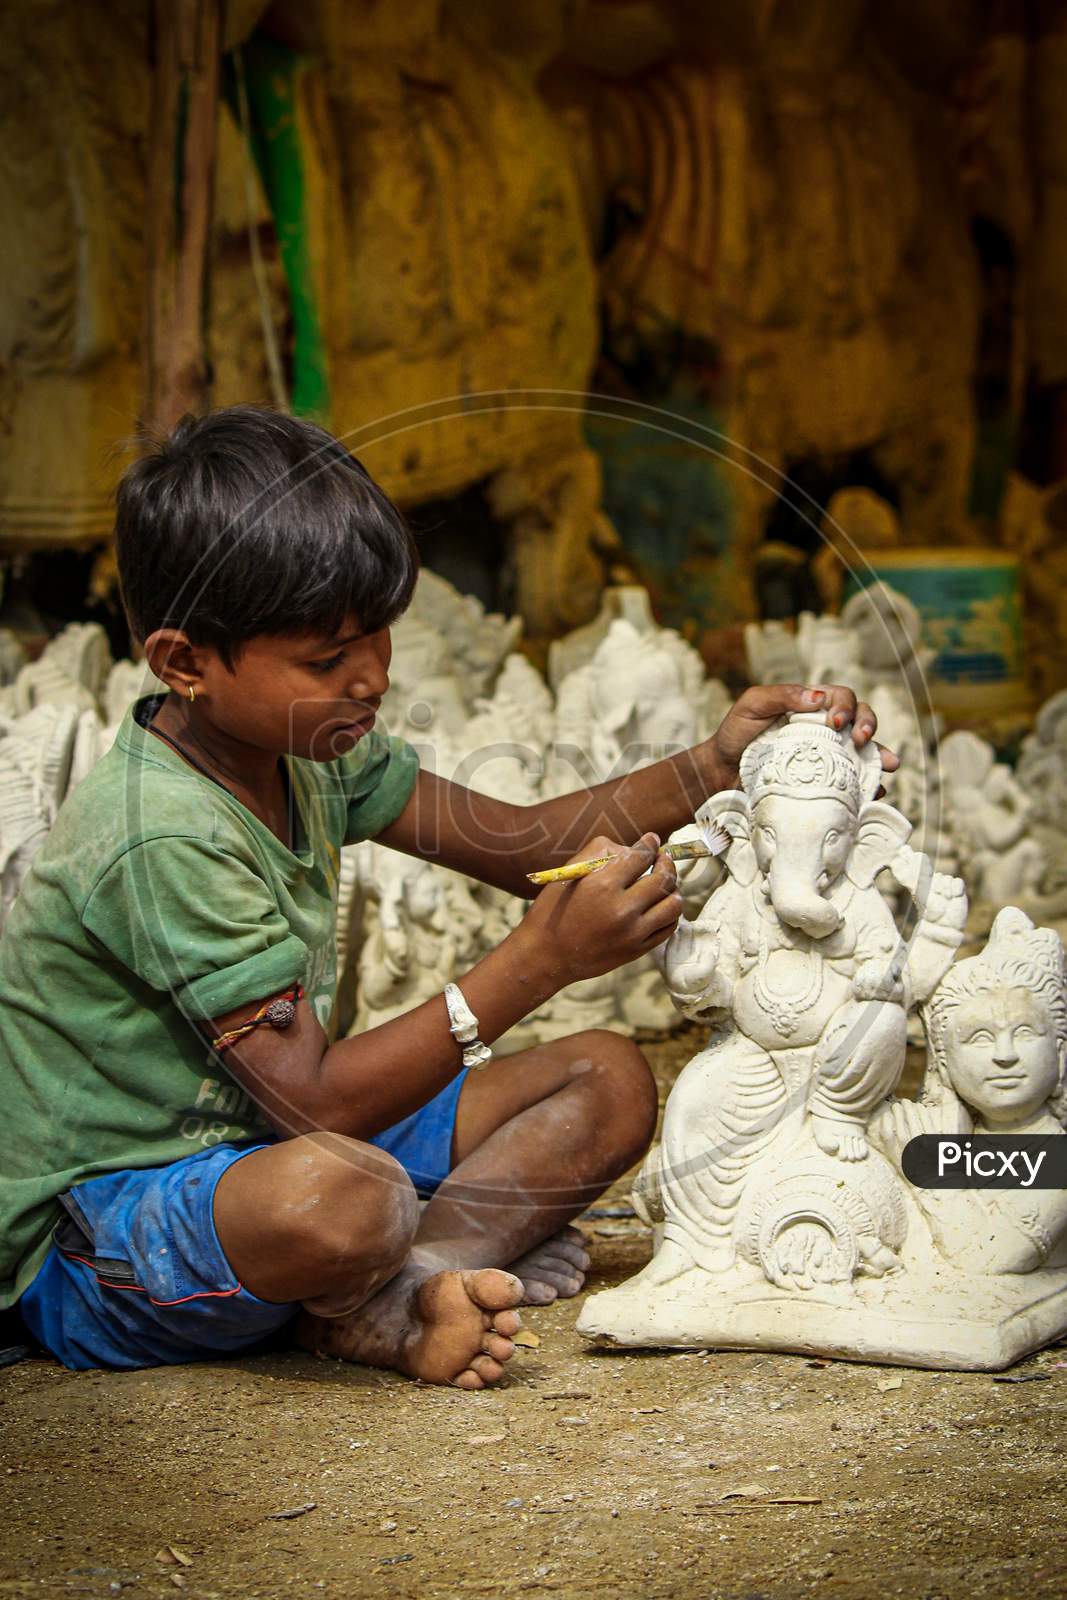 Small kid painting and sculpting ganesh idol